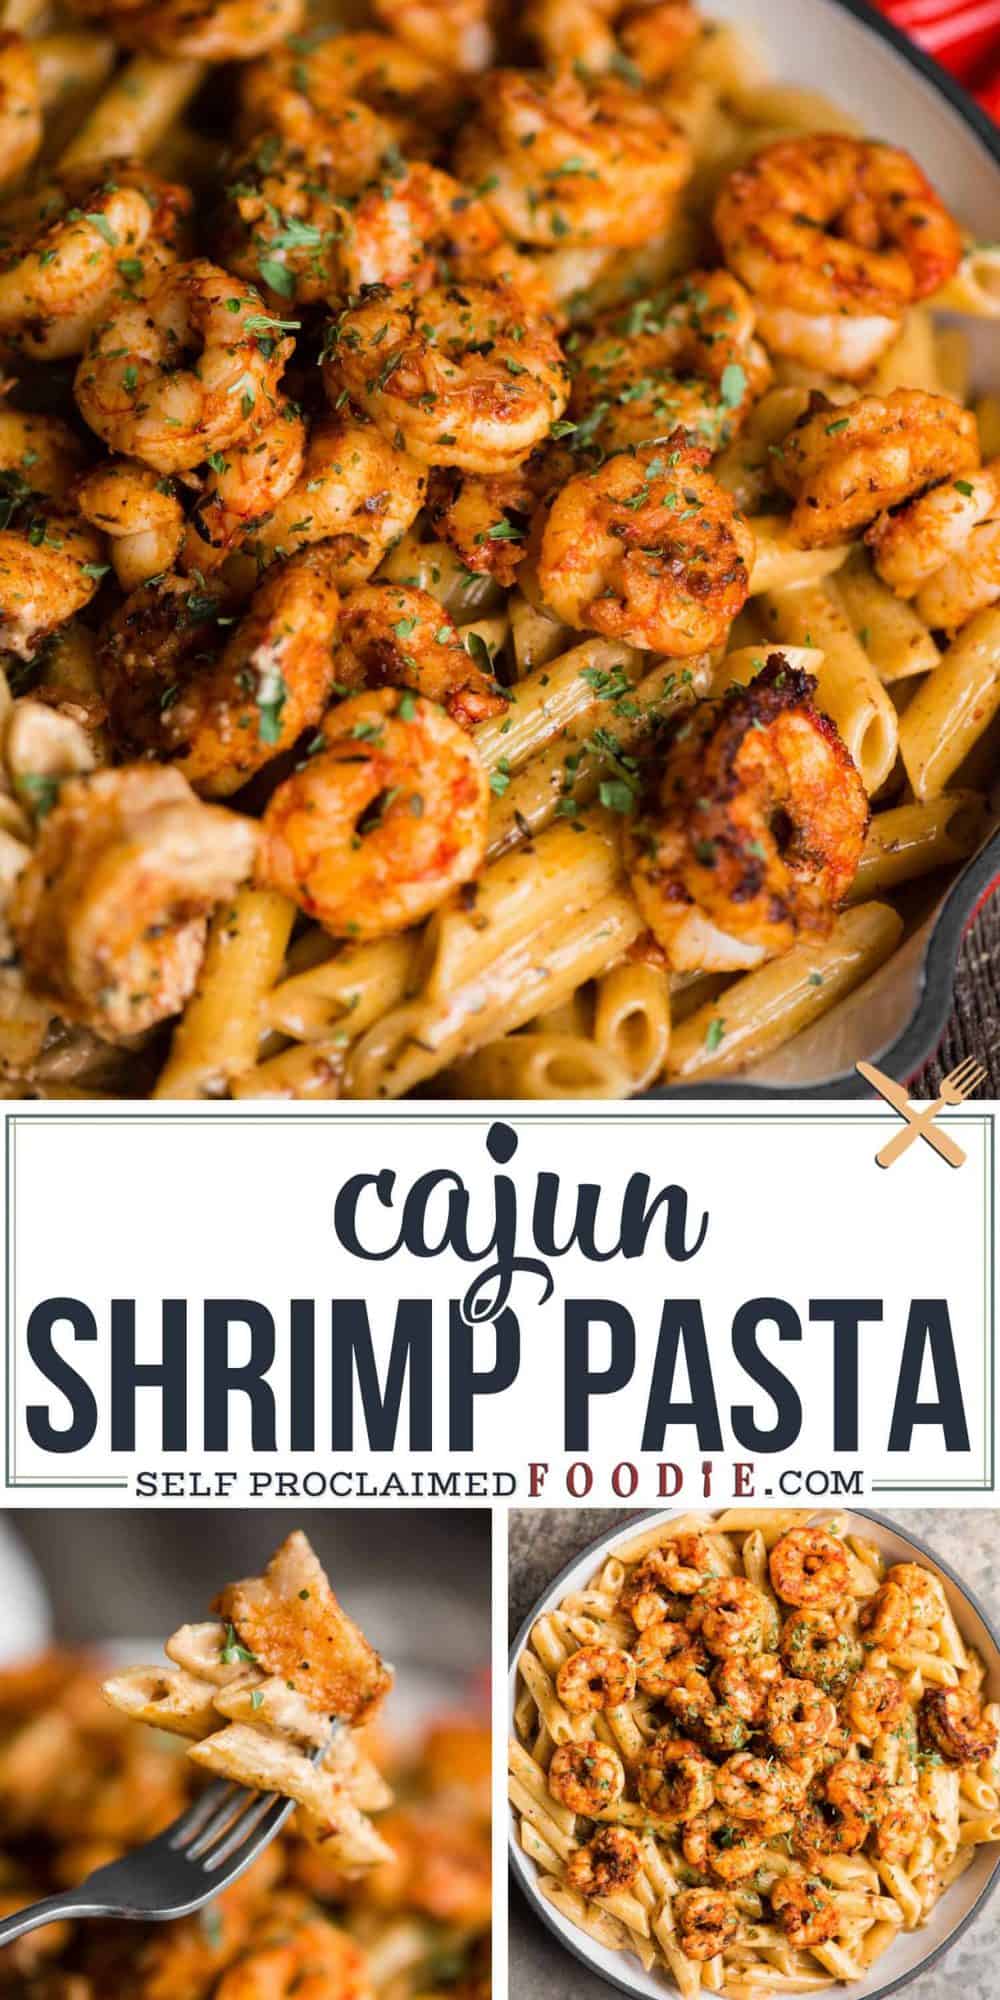 Cajun Shrimp Pasta - Self Proclaimed Foodie